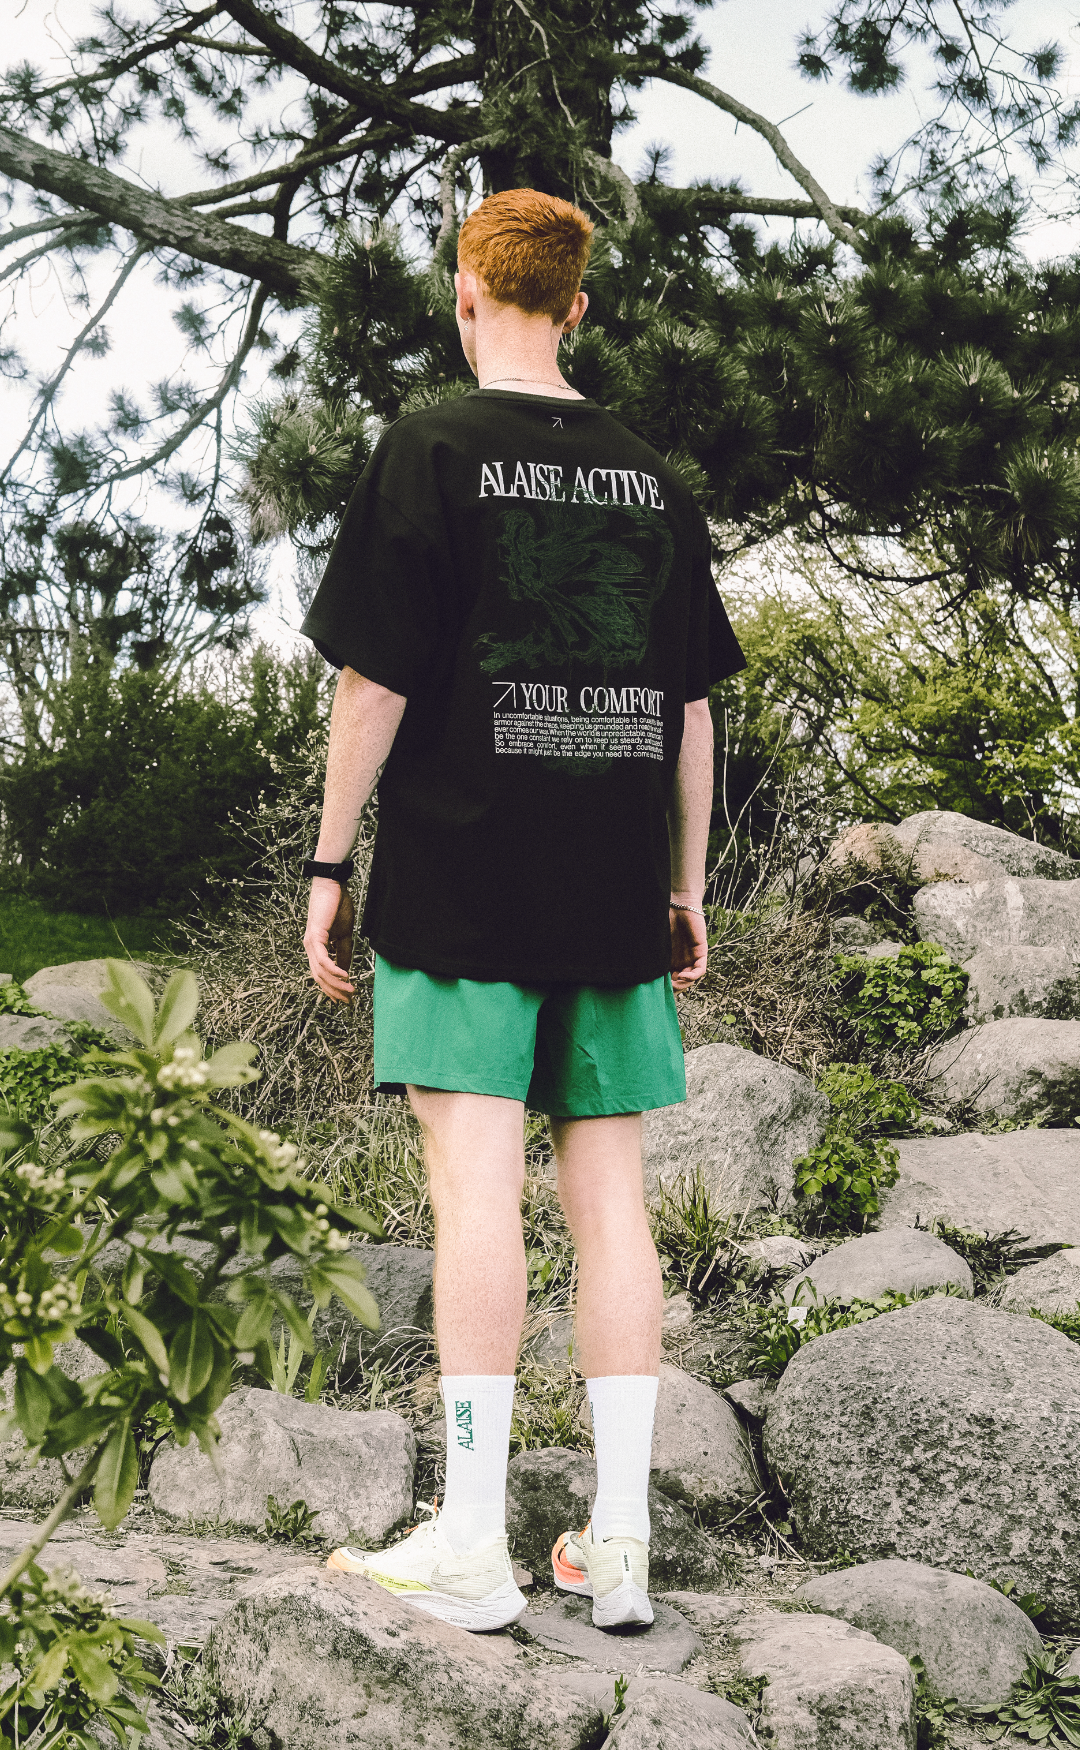 Alaise Graphic Box Fit T-Shirt - Black